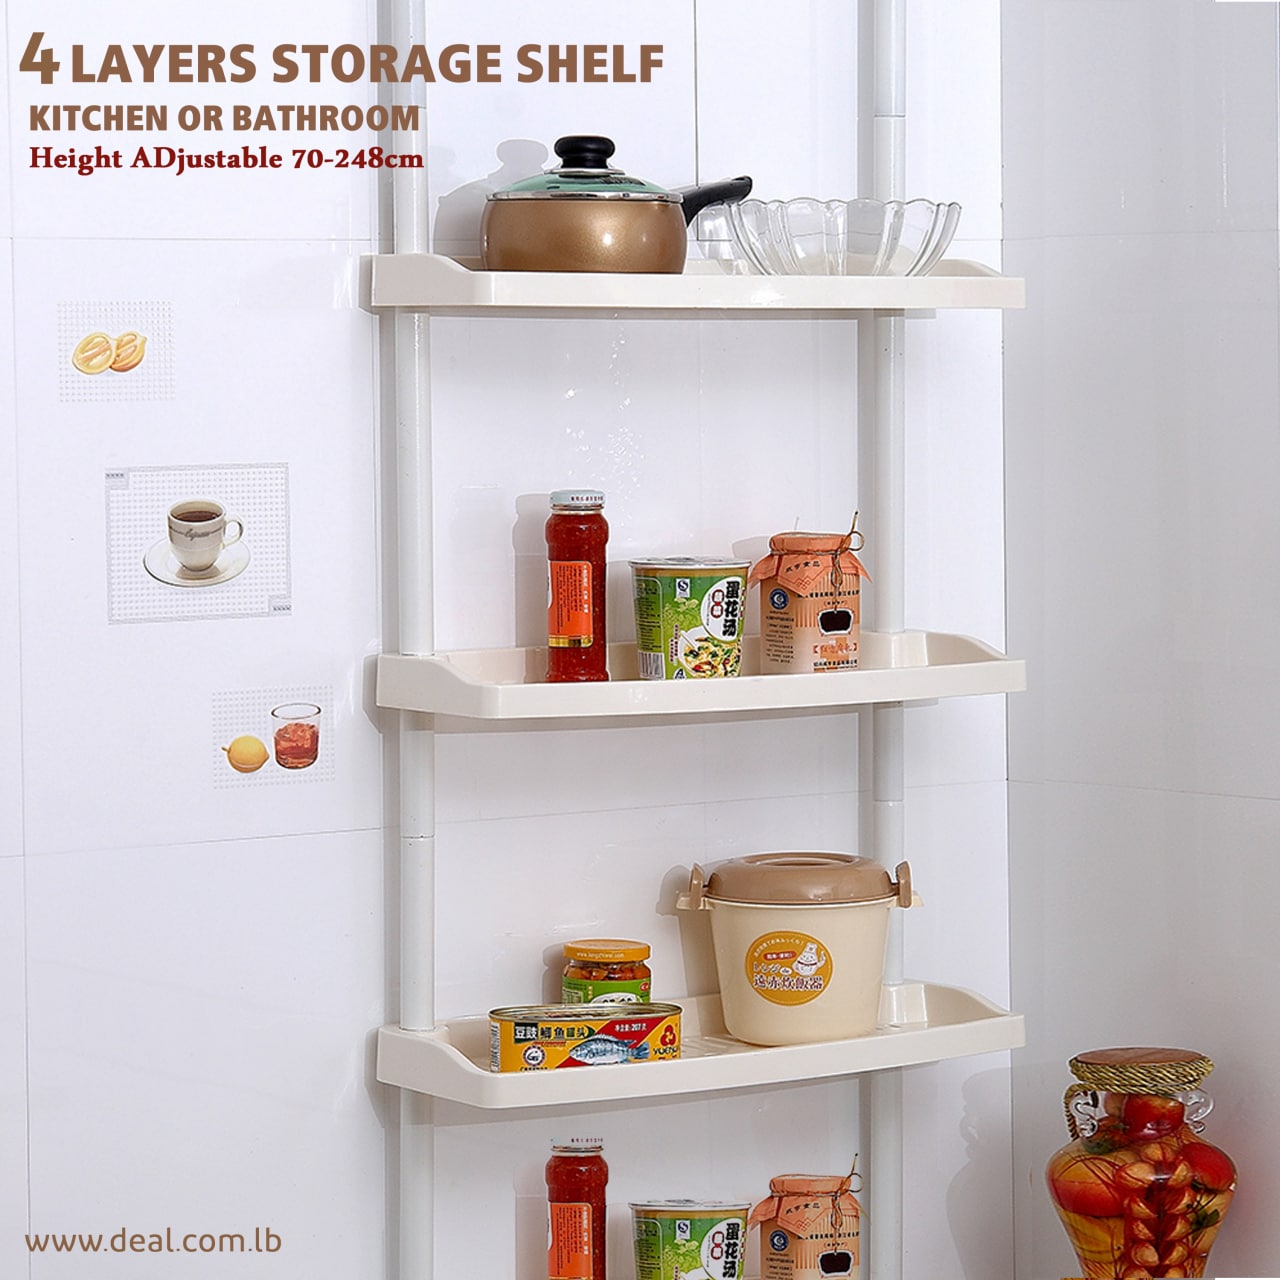 4 layers storage shelf for Kitchen or bathroom - Height Adjustable 70-248cm